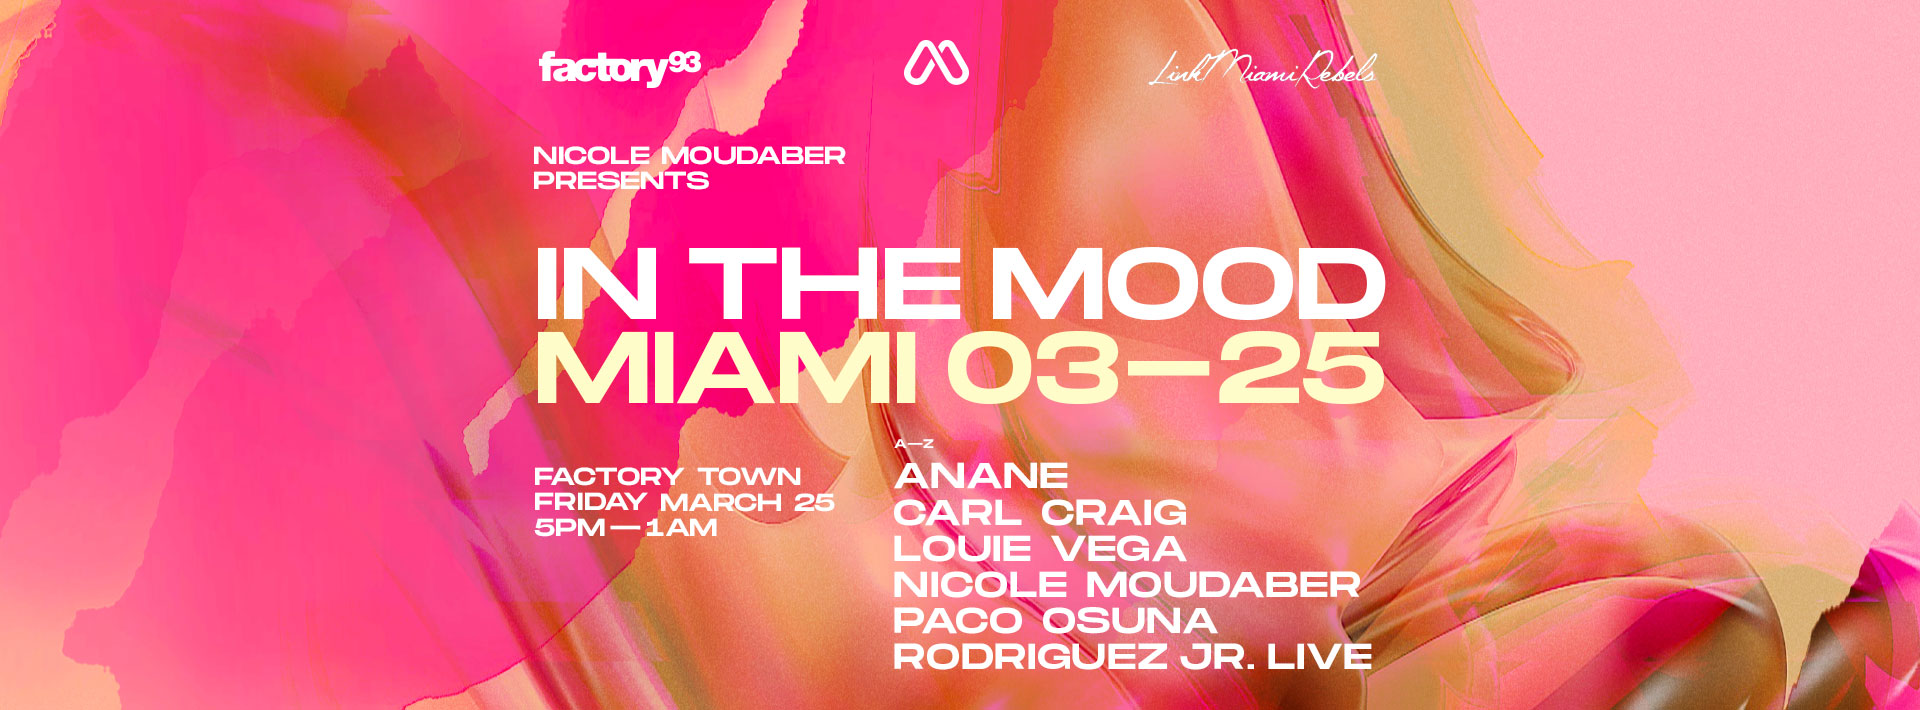 Nicole Moudaber presents In The Mood Miami